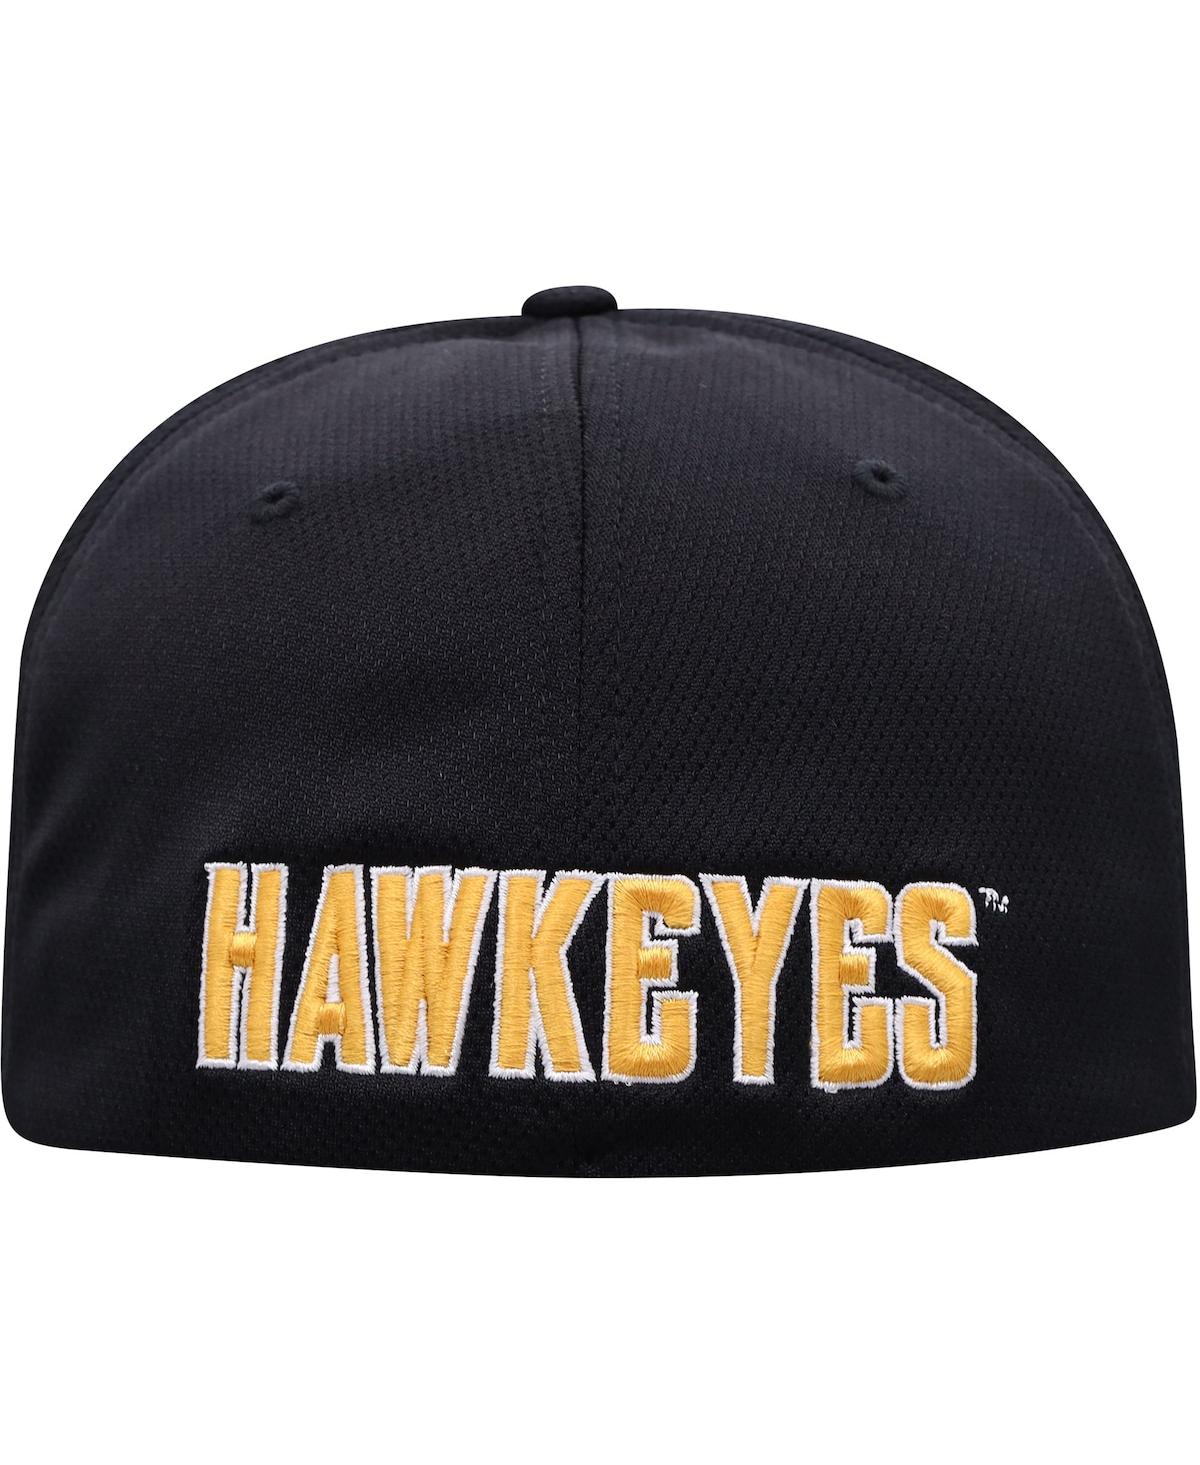 Shop Top Of The World Men's  Black Iowa Hawkeyes Reflex Logo Flex Hat